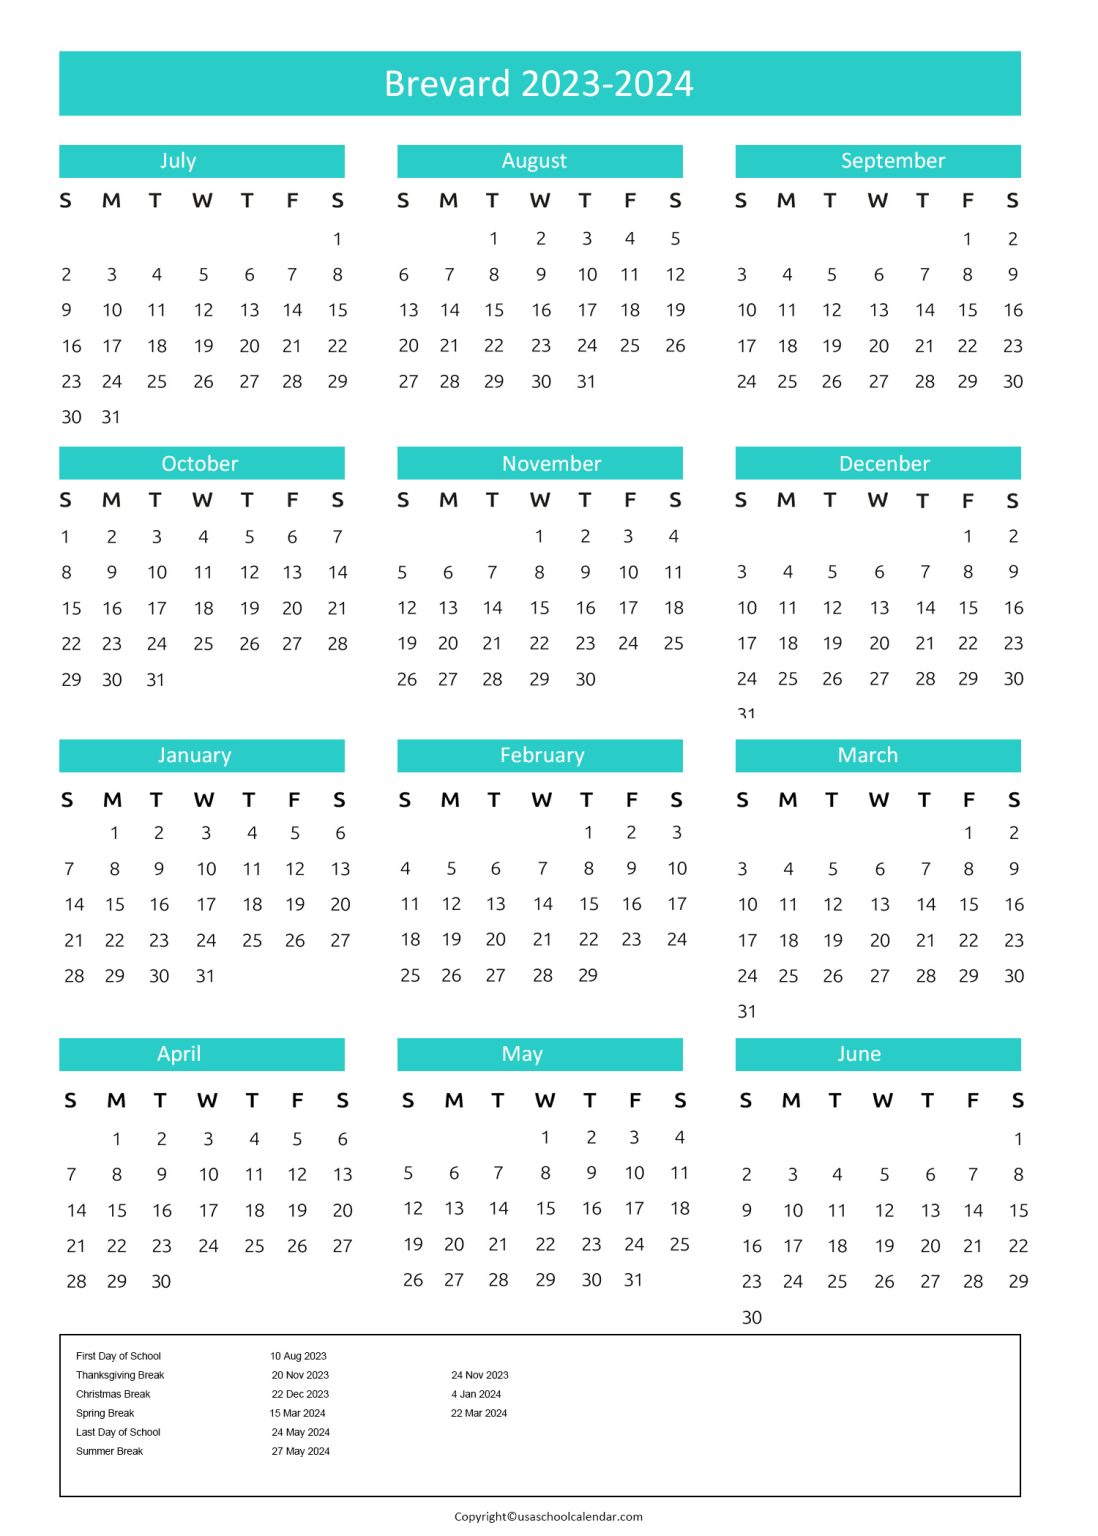 brevard-county-schools-calendar-holidays-2023-2024